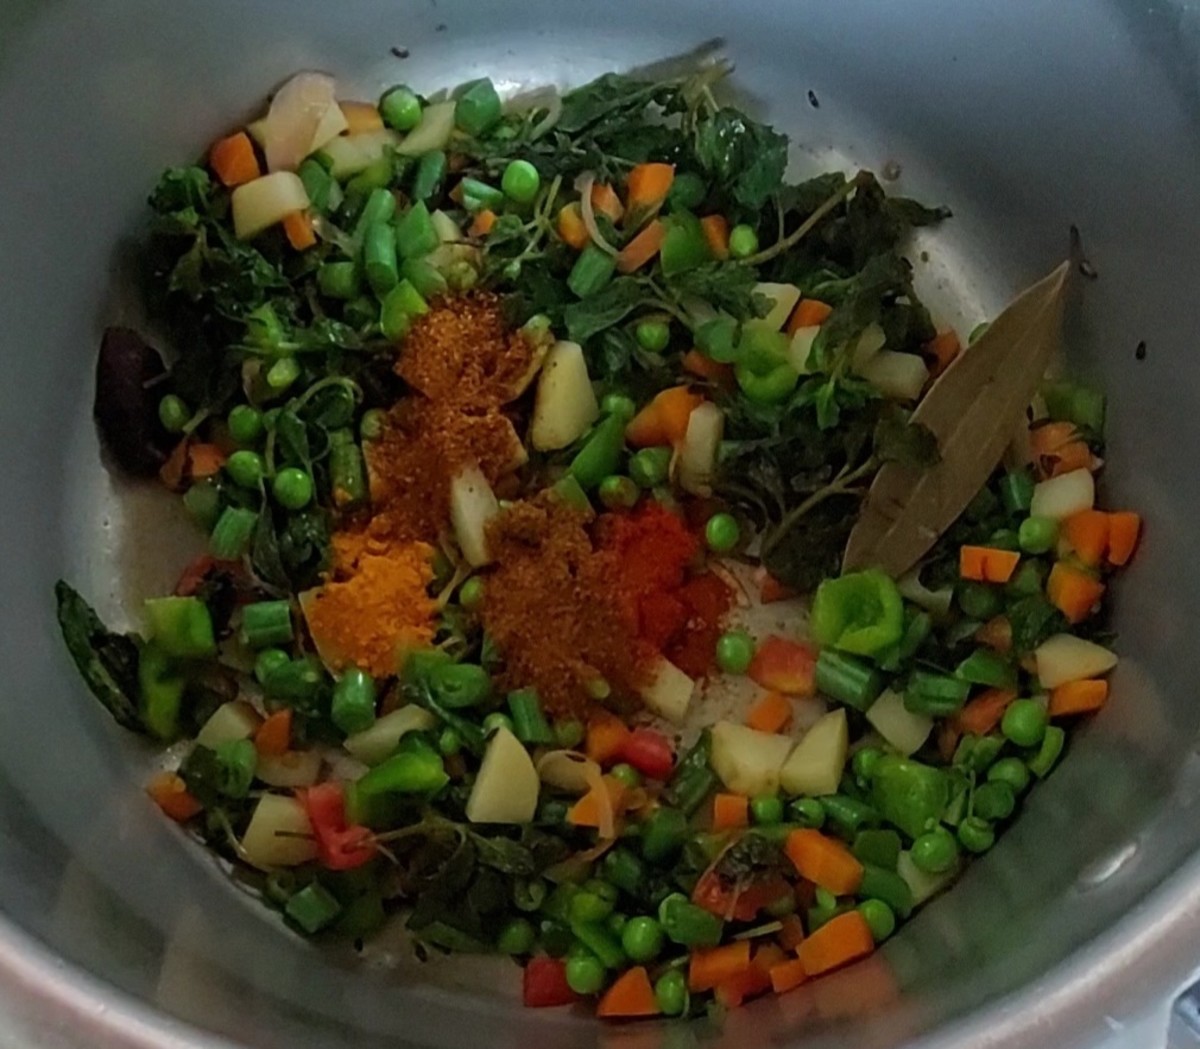 Add 1/2 teaspoon turmeric powder, 1/2 teaspoon red chili powder, 1/2 teaspoon garam masala powder and 1 teaspoon pavbhaji masala powder. Mix to combine spices with vegetables.